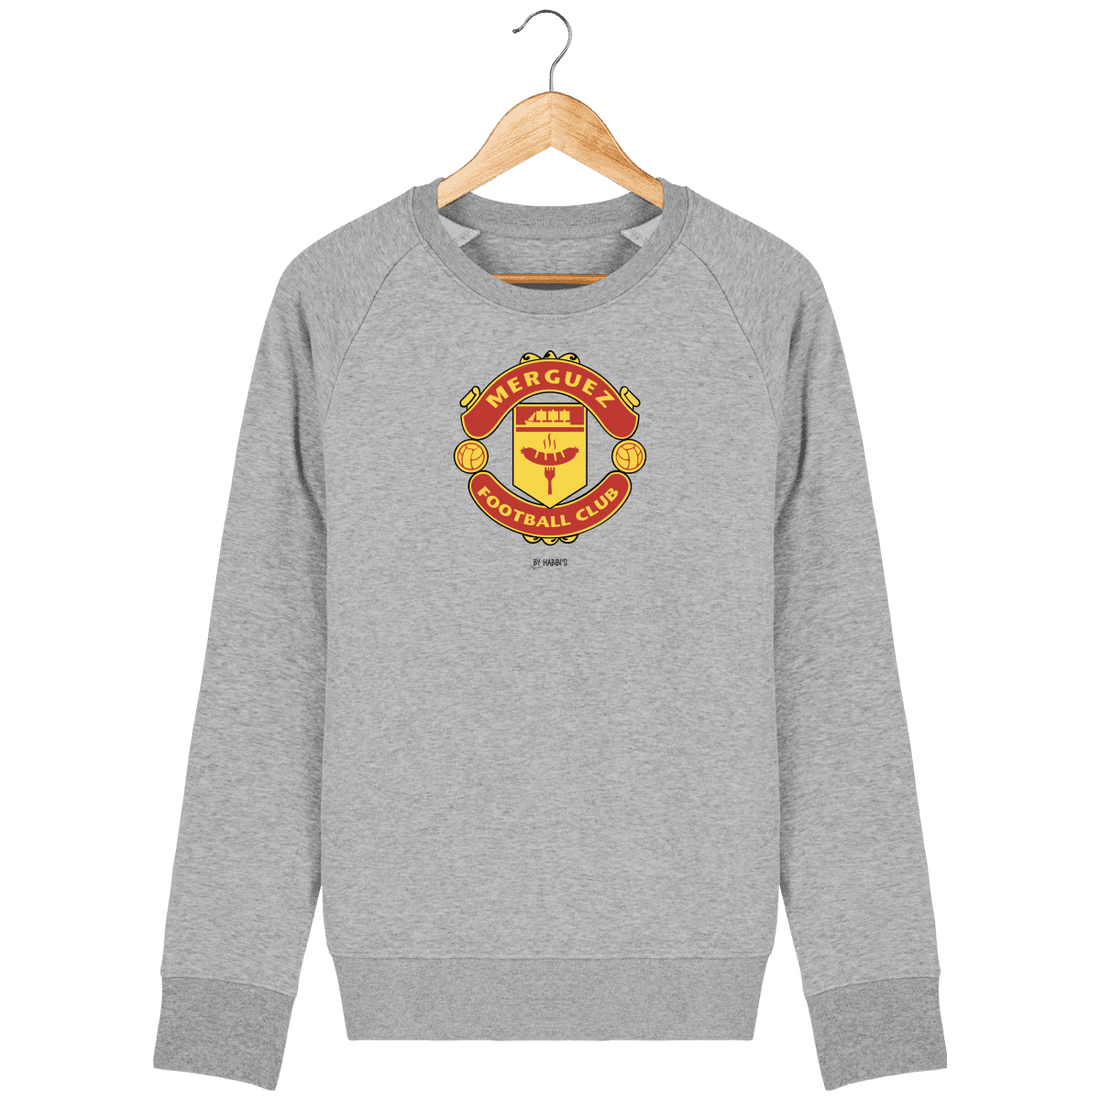 Homme>Sweatshirts - Sweat Homme Merguez Football Club